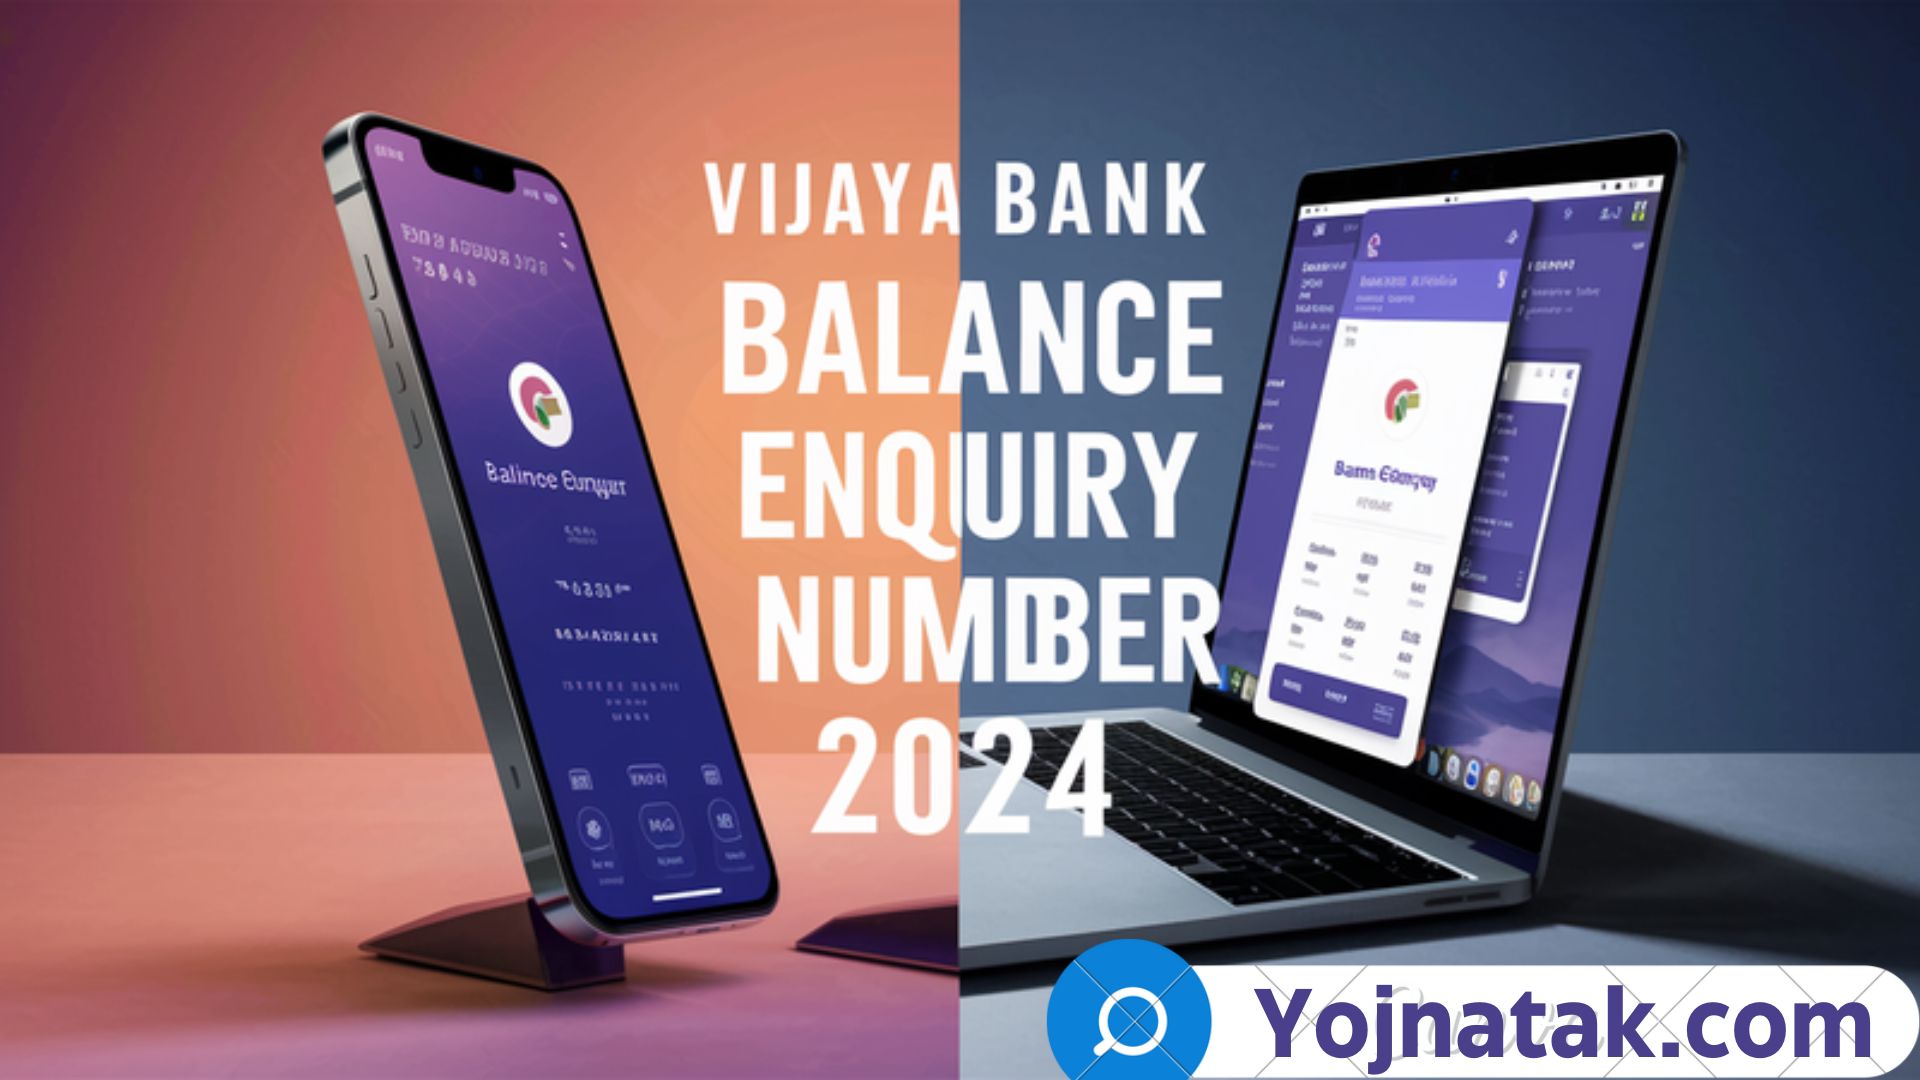 Vijaya Bank Balance Enquiry Number 2024